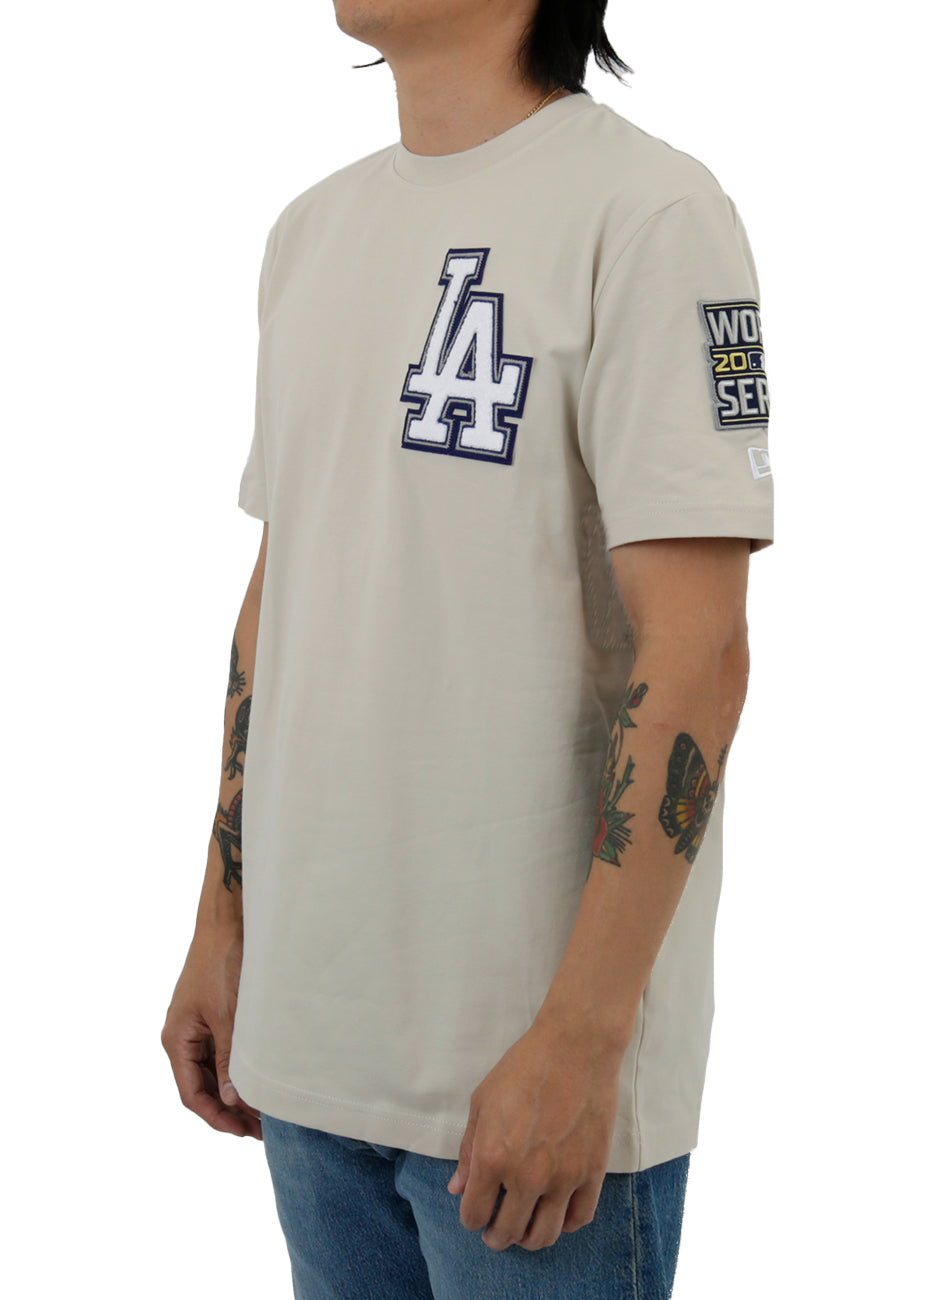 LA Dodgers Logo Select T-Shirt